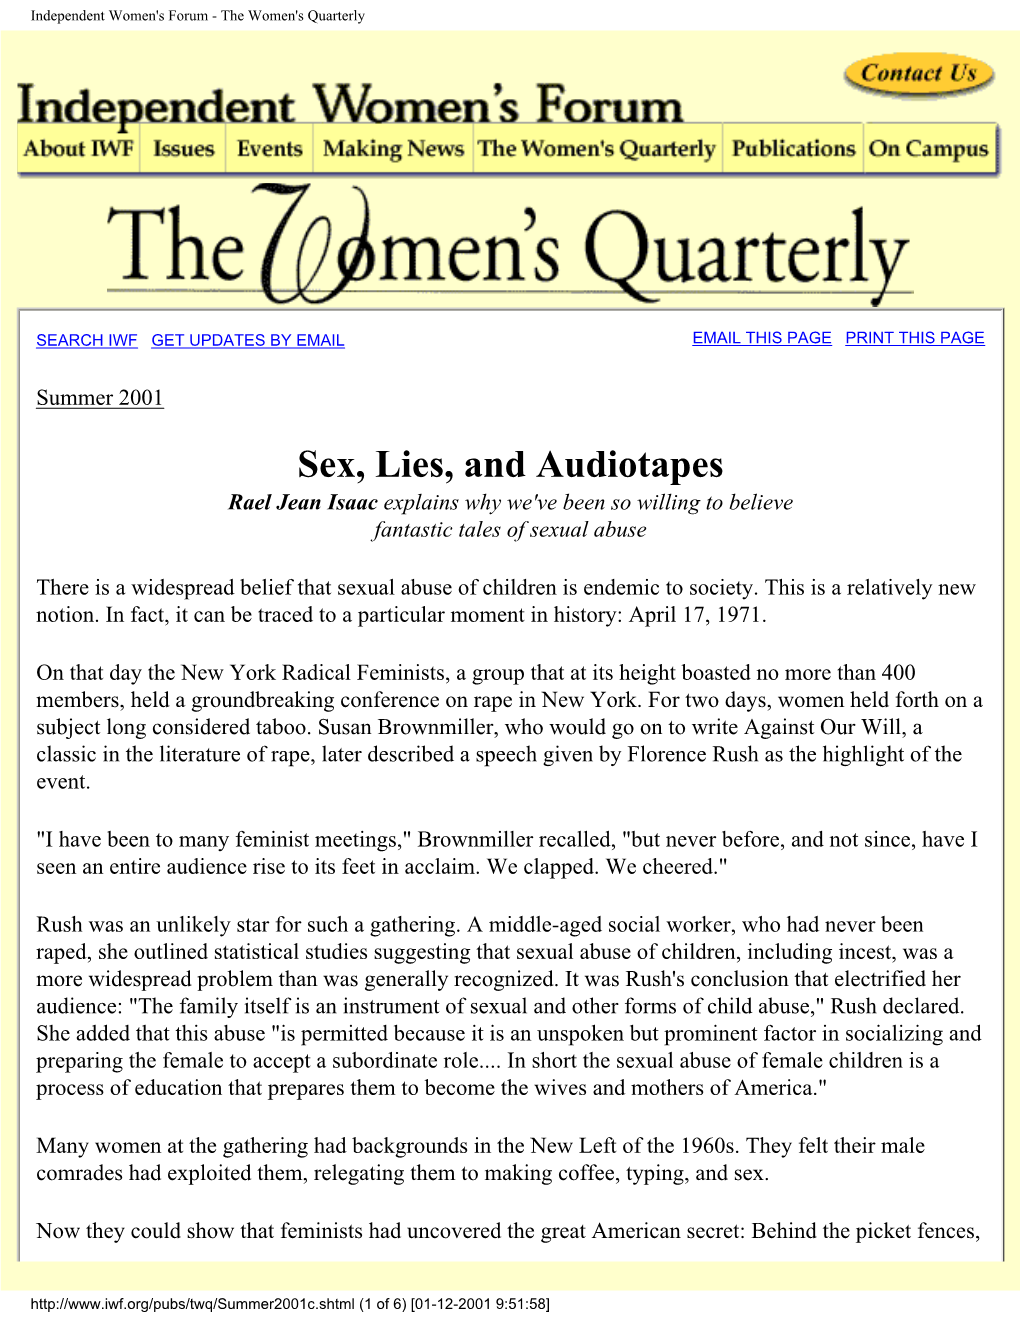 Independent Women's Forum - the Women's Quarterly